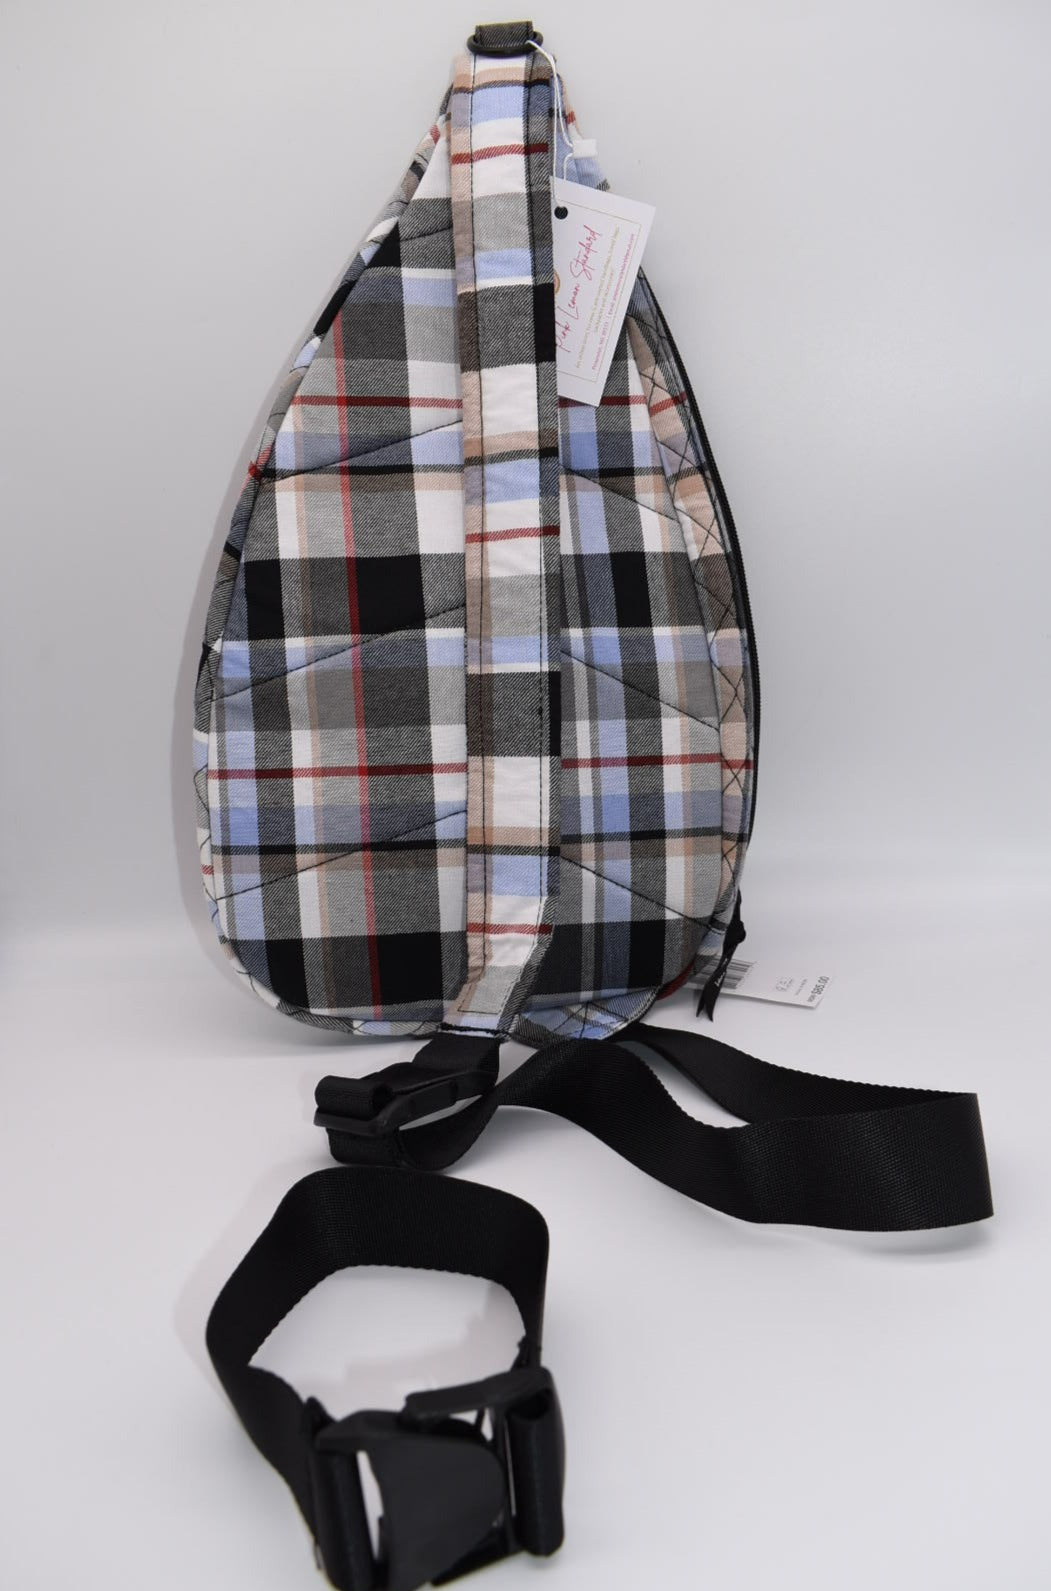 Vera Bradley Essential Sling Bag in "Perfectly Plaid" Pattern